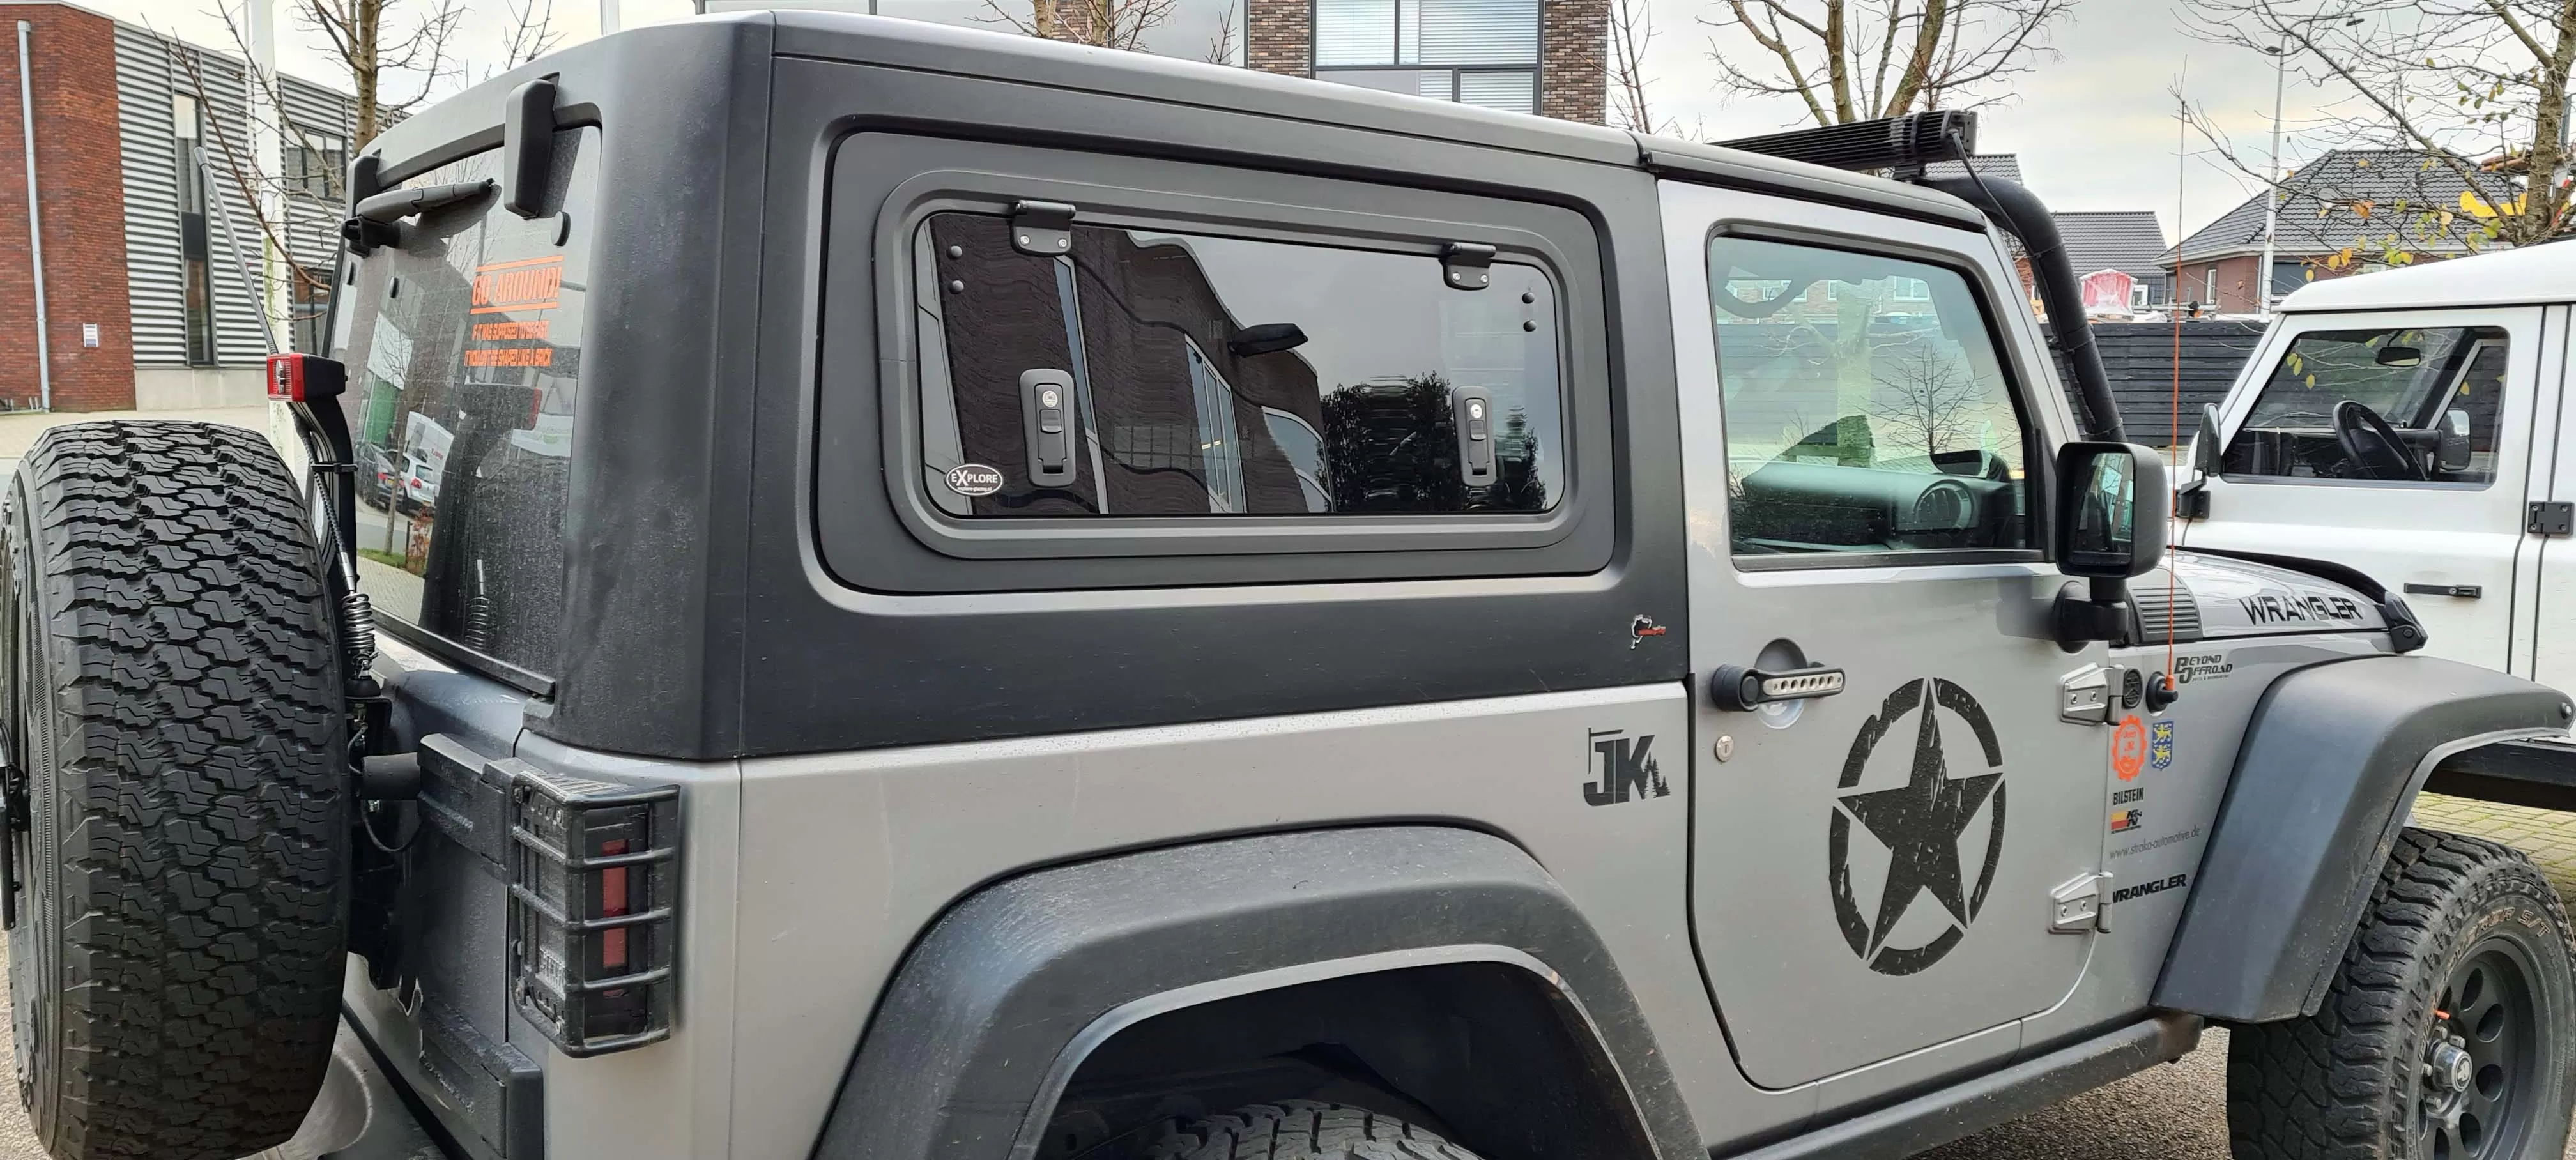 Explore Glazing Jeep Wrangler JK JL 3-door gullwing window glass